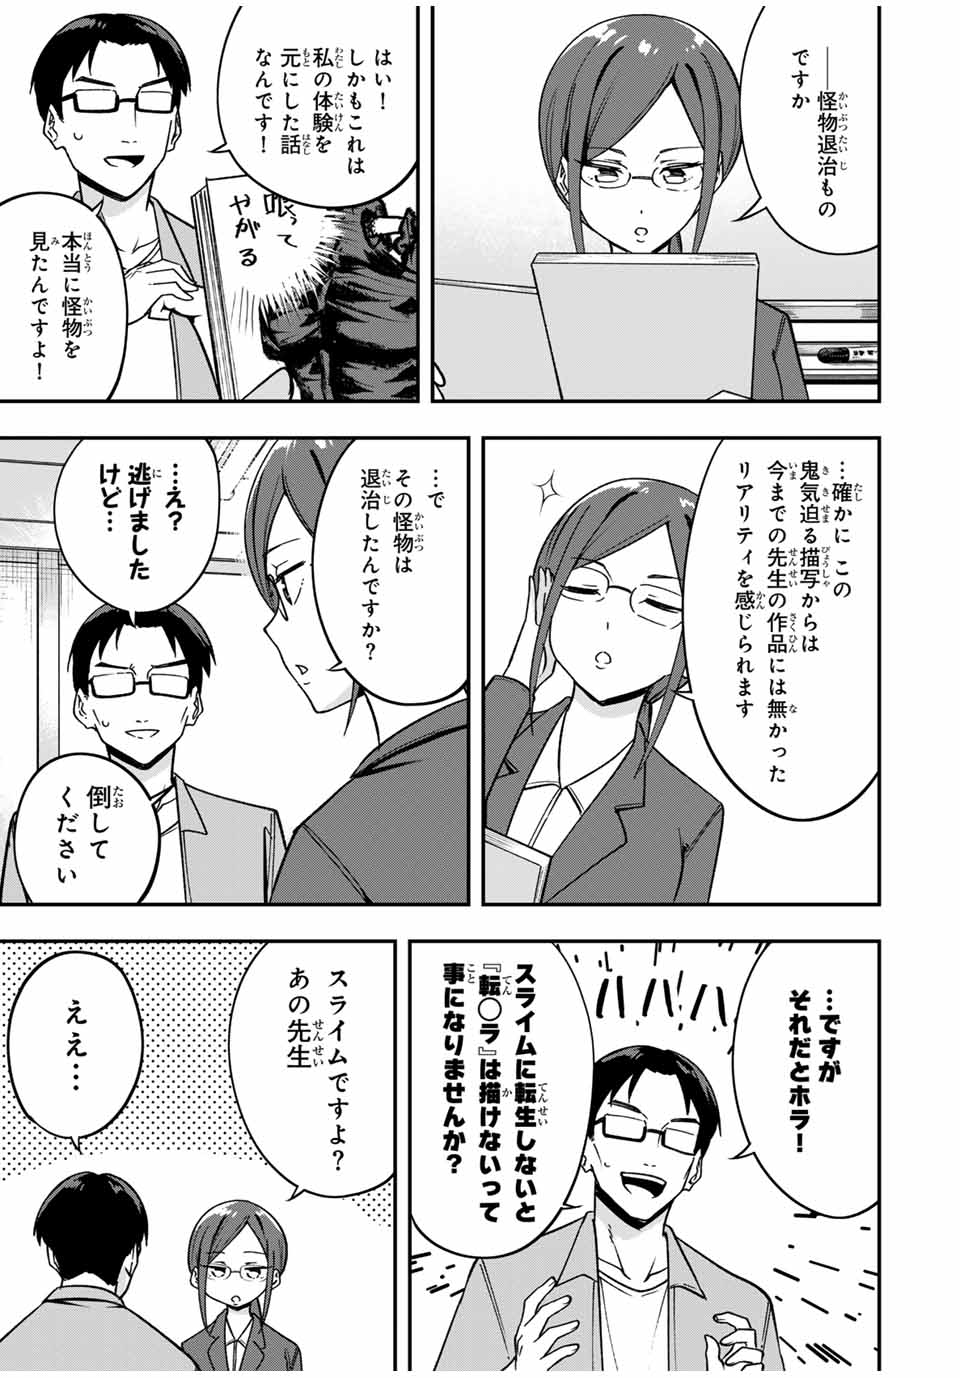 Heroine wa xx Okasegitai - Chapter 11 - Page 9